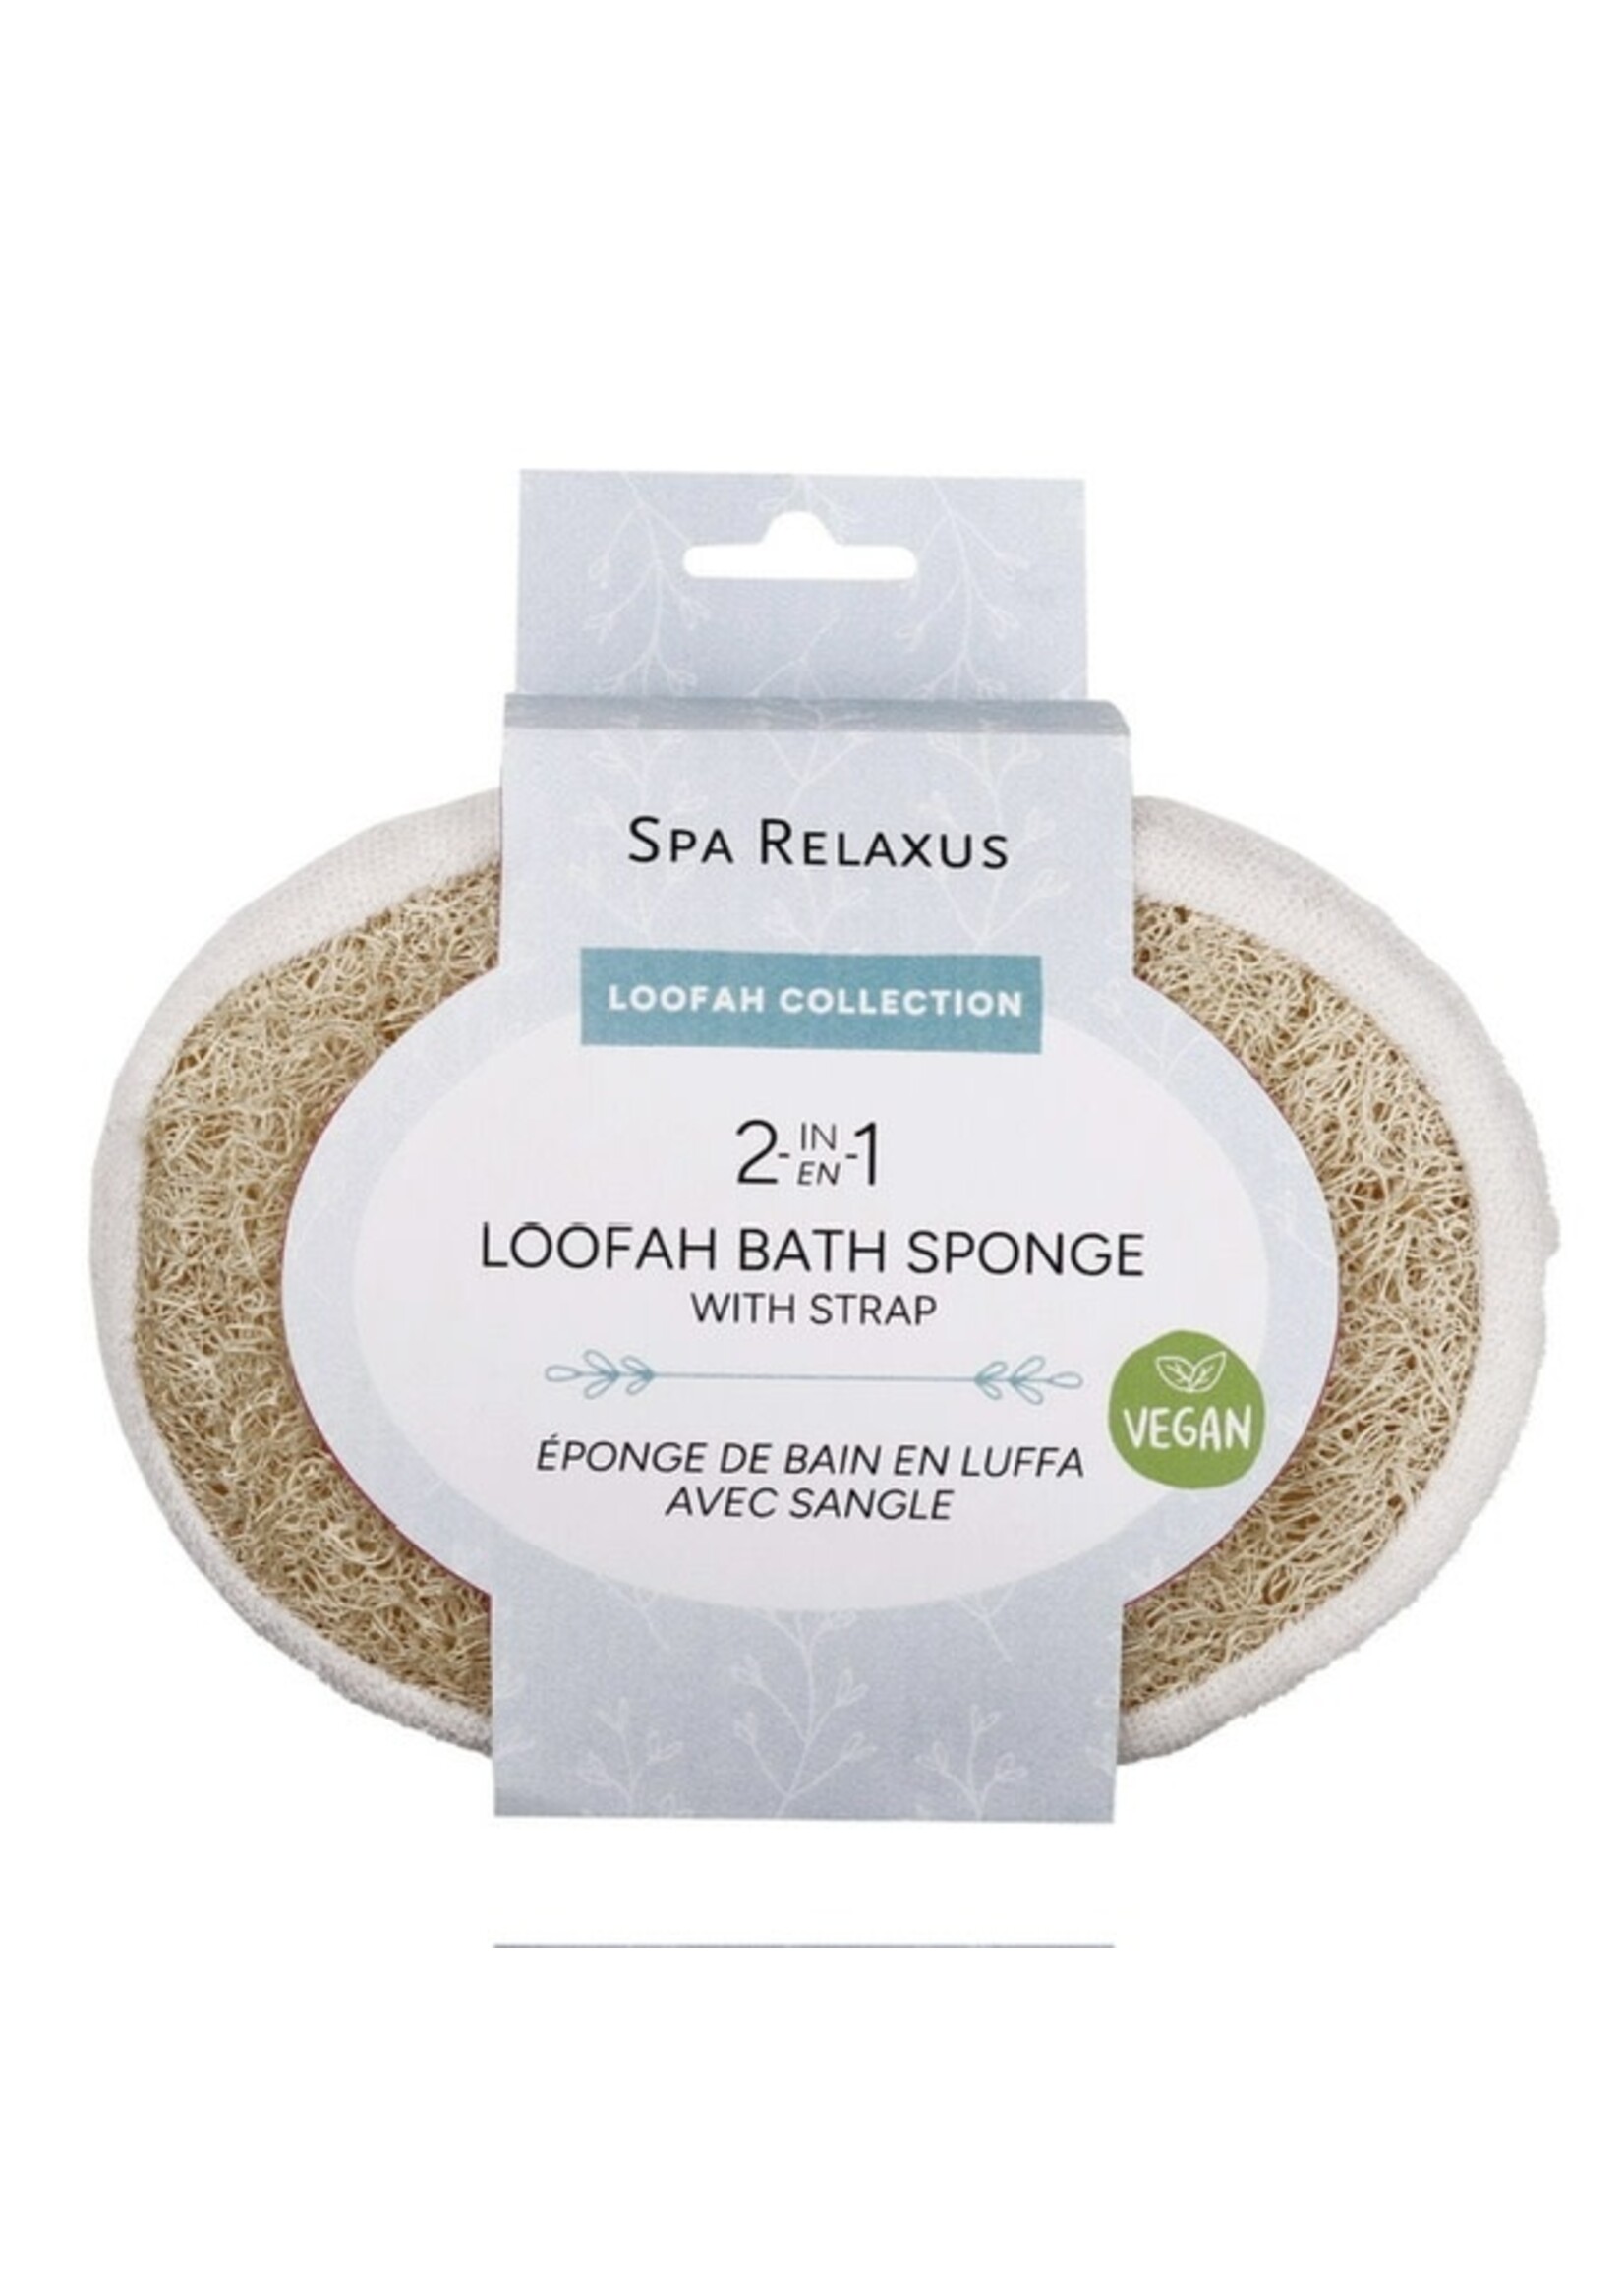 Spa Relaxus Vegan 2-IN-1 Loofah Bath Sponge With Strap